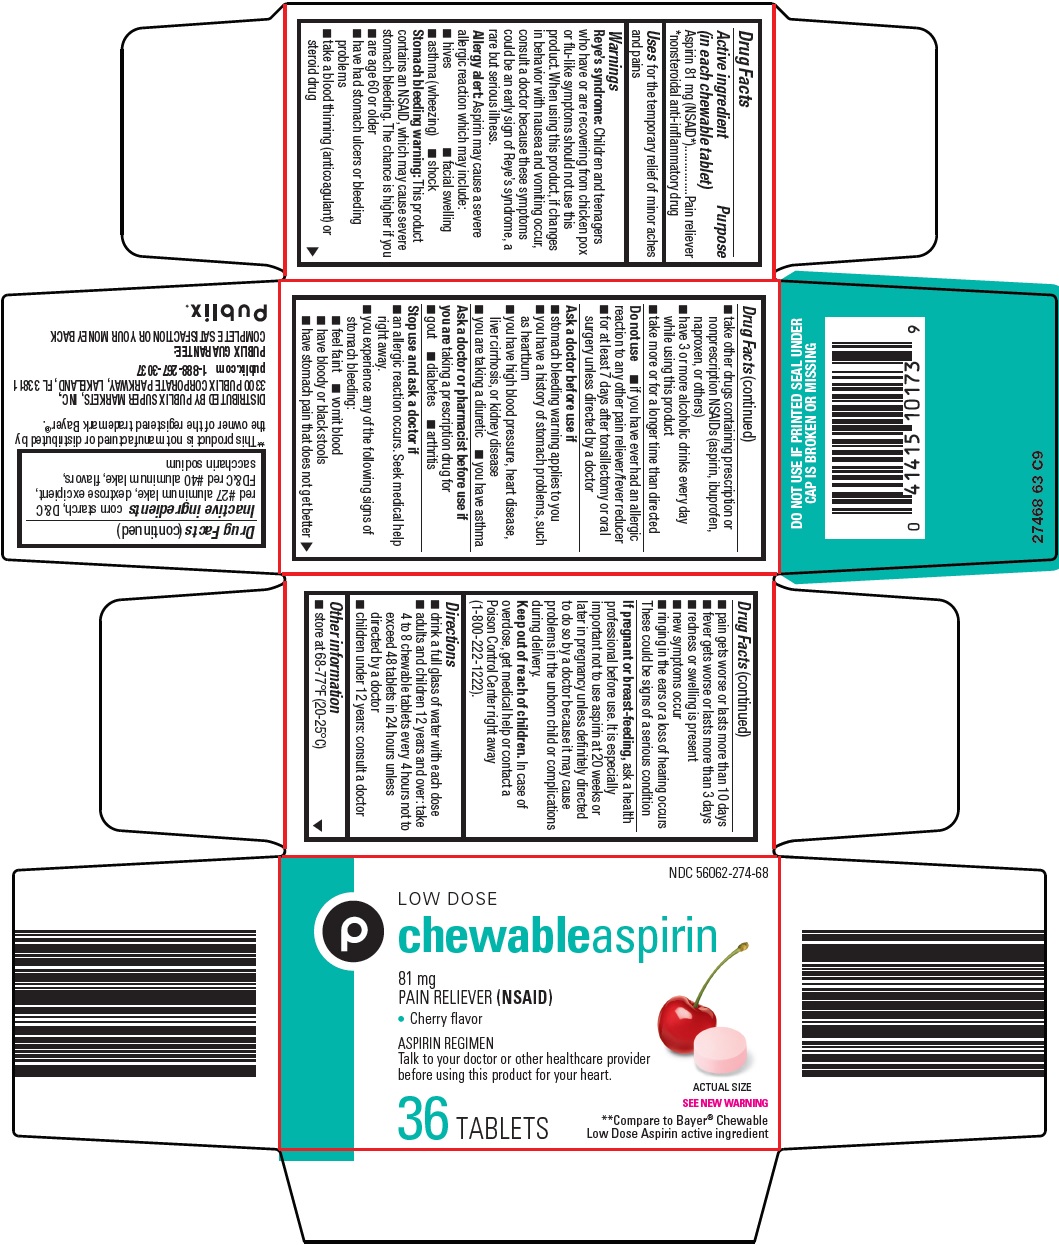 274-63-chewable-aspirin